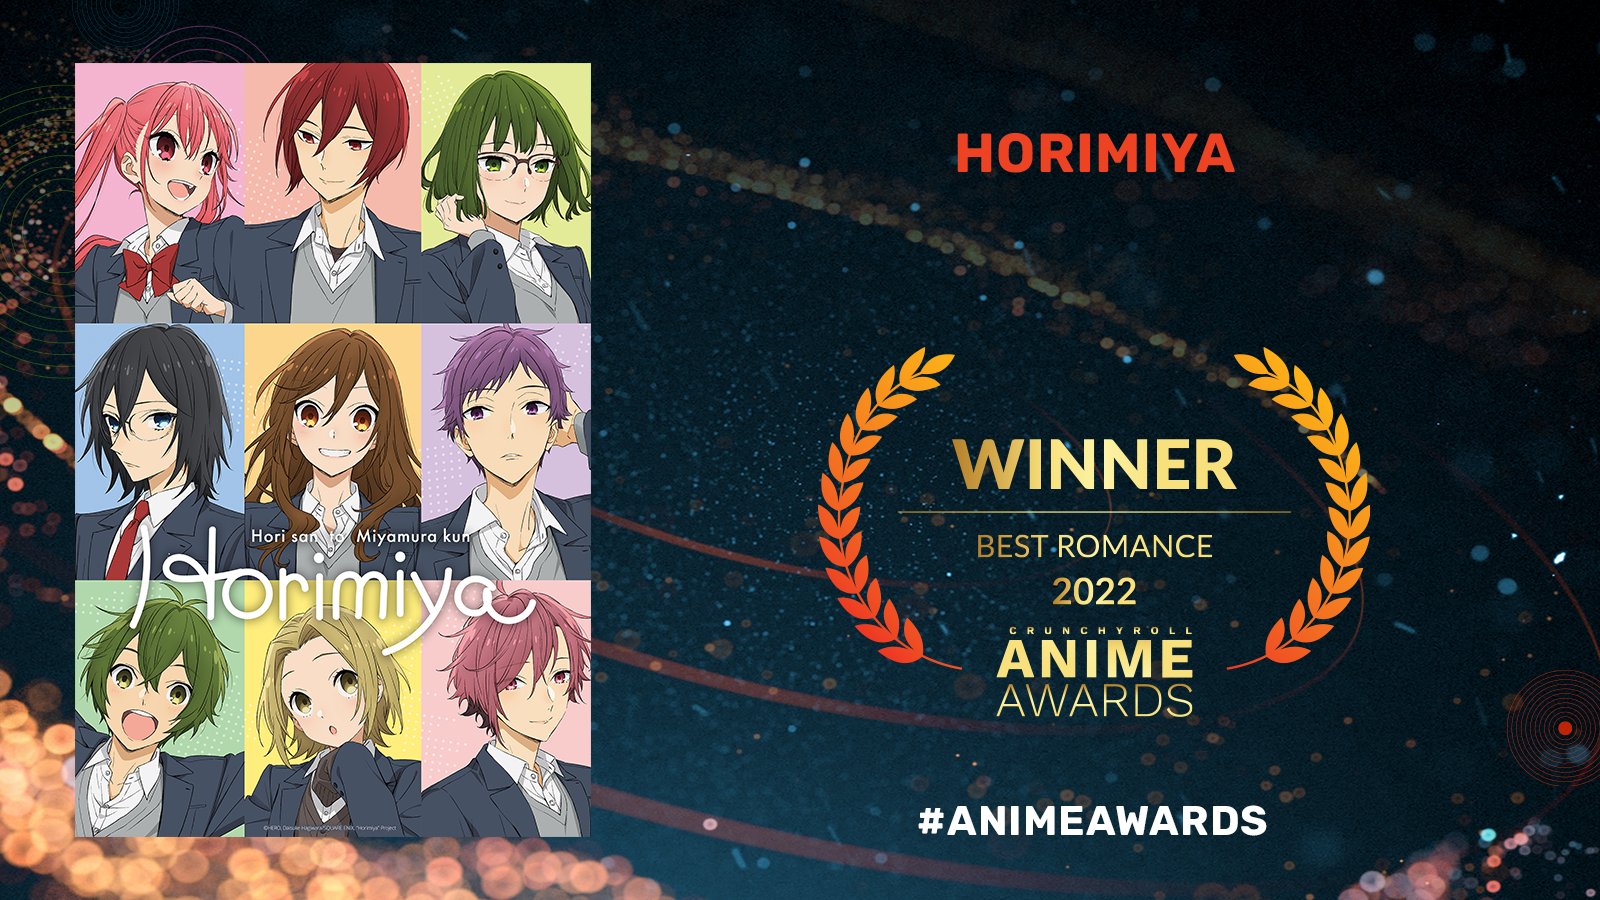 6 top awardwinning anime films on Netflix to watch